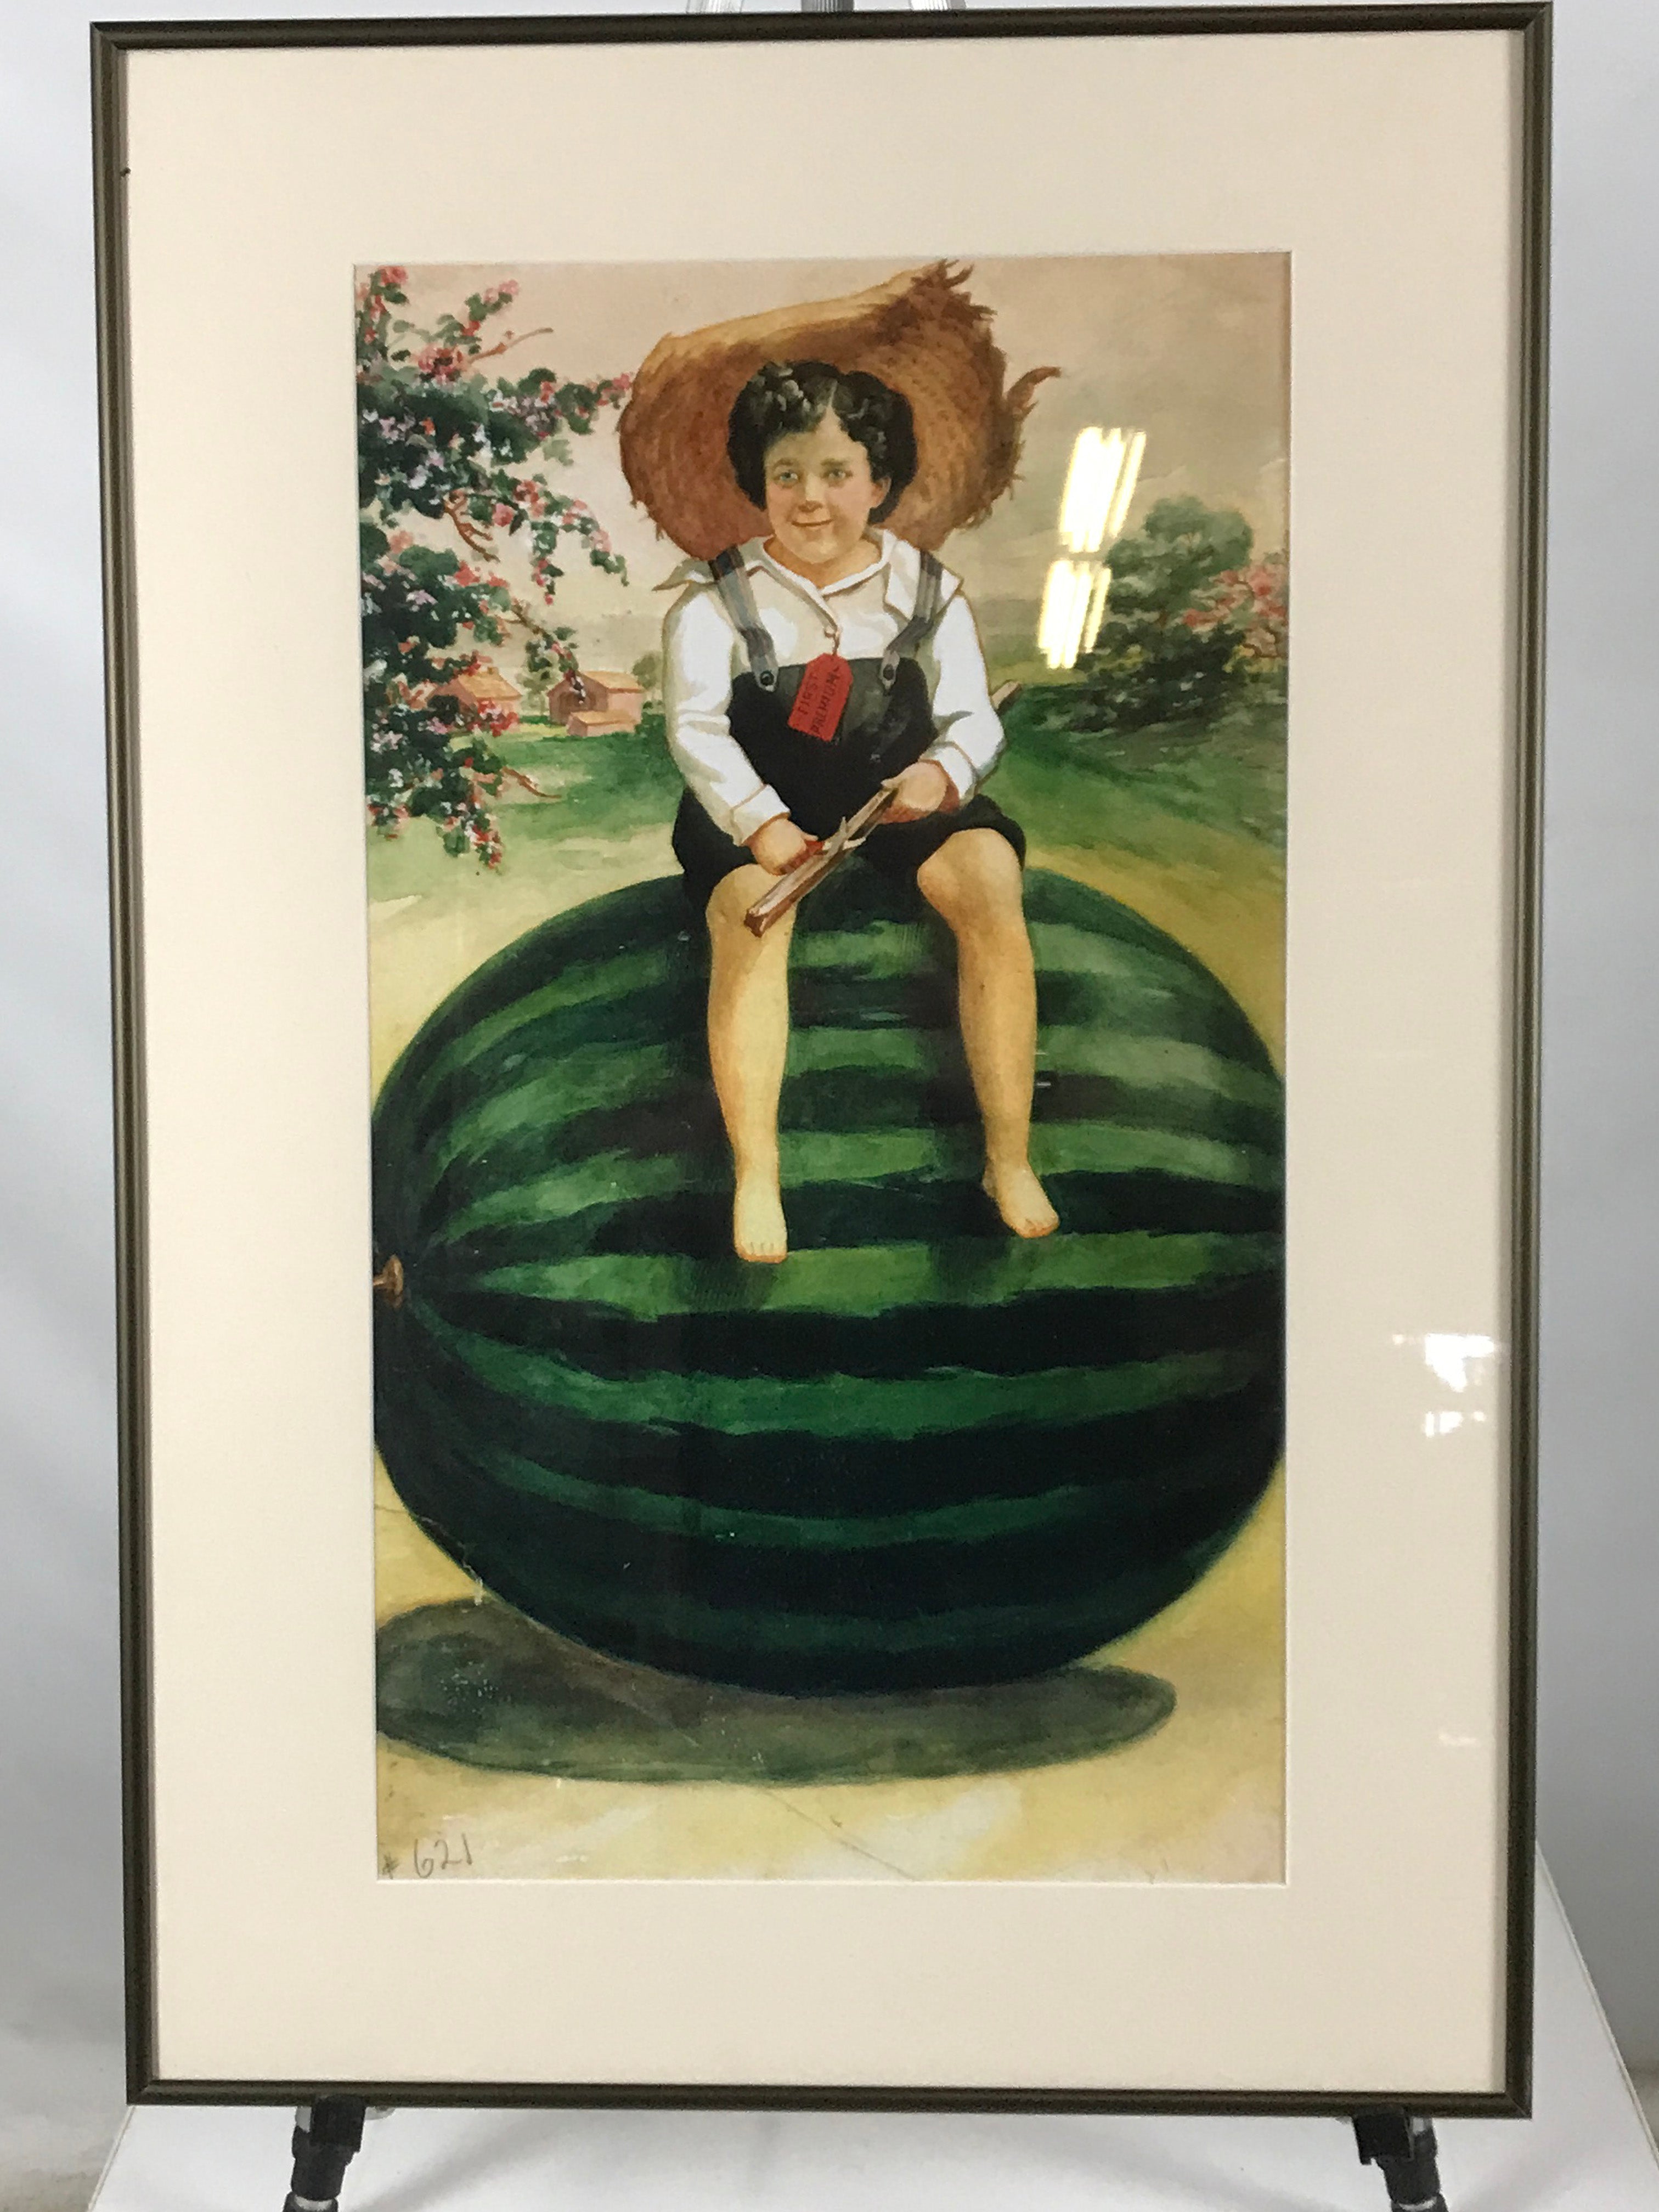 Framed Whittling Watermelon Boy Print